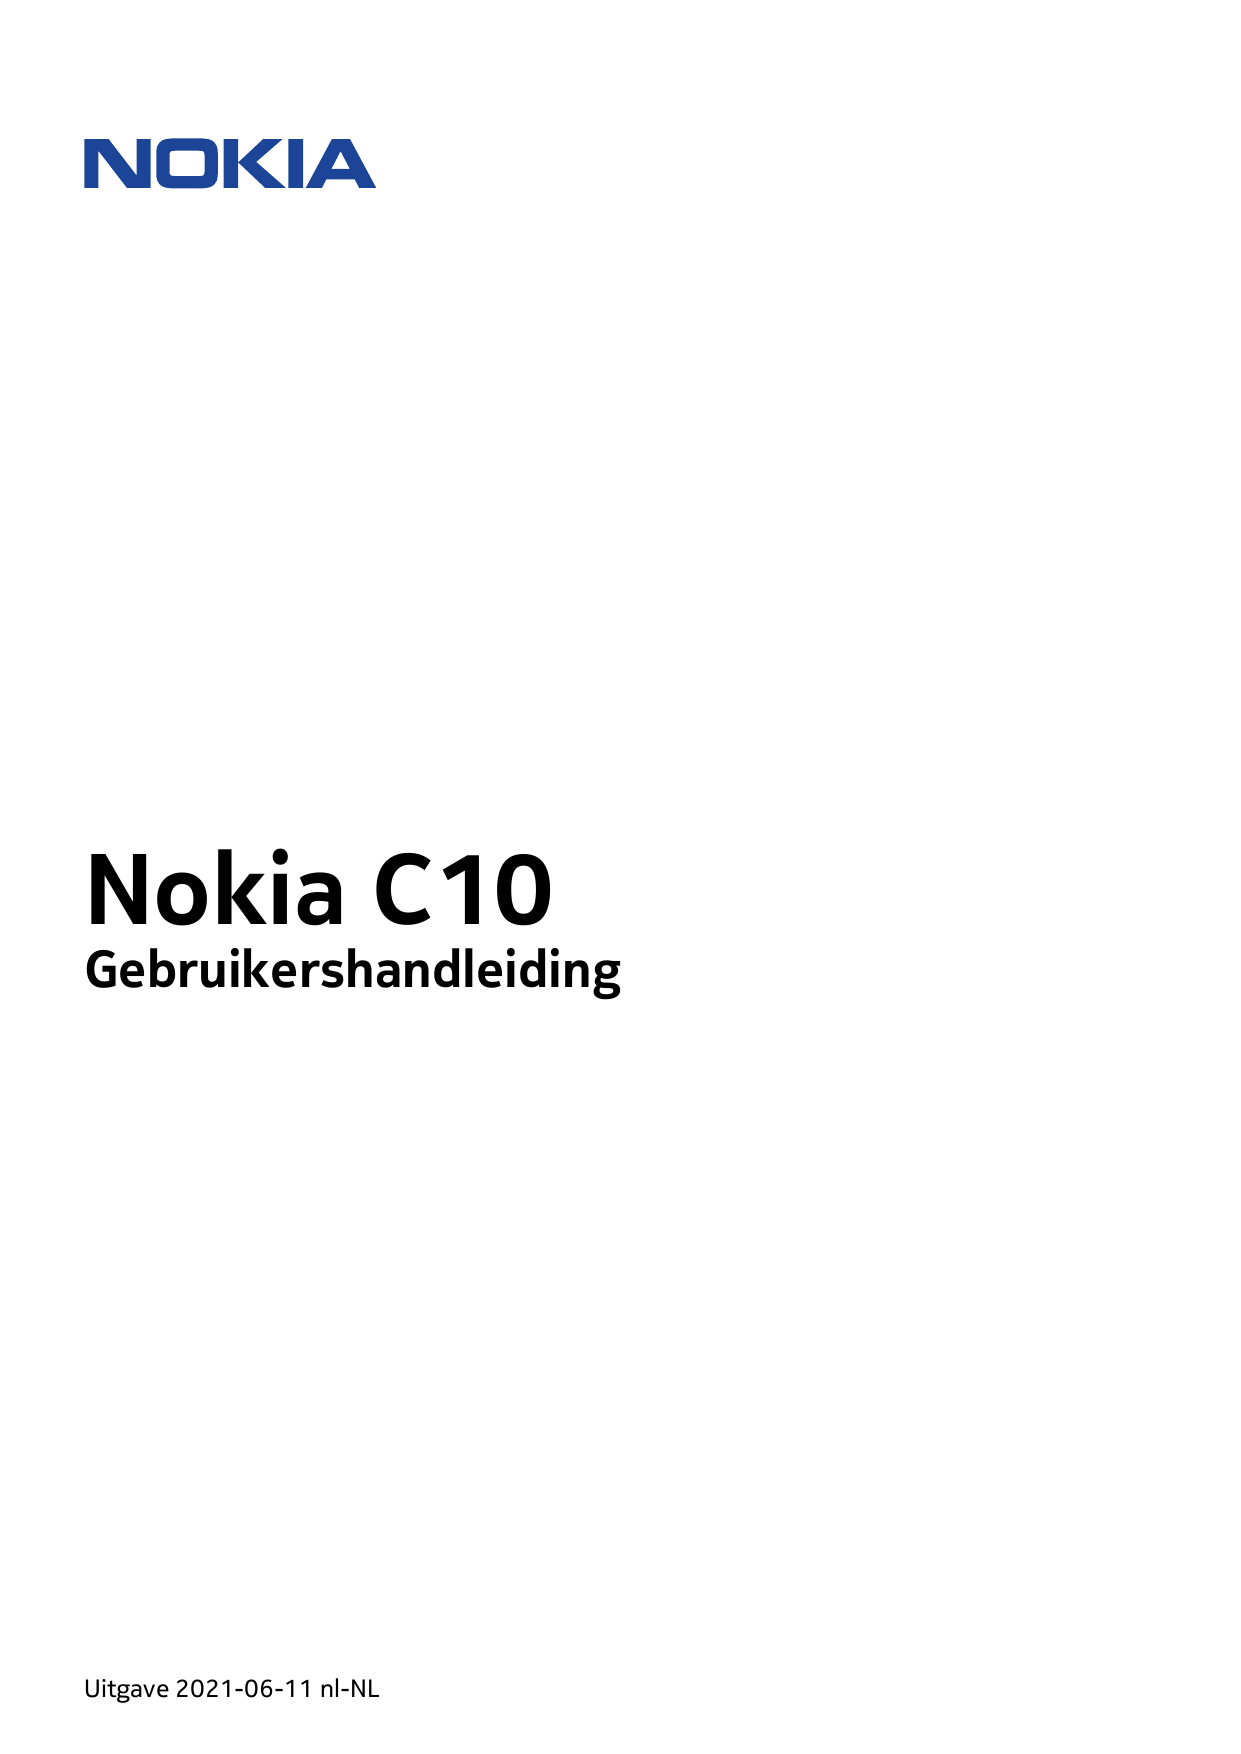 Nokia C10GebruikershandleidingUitgave 2021-06-11 nl-NL